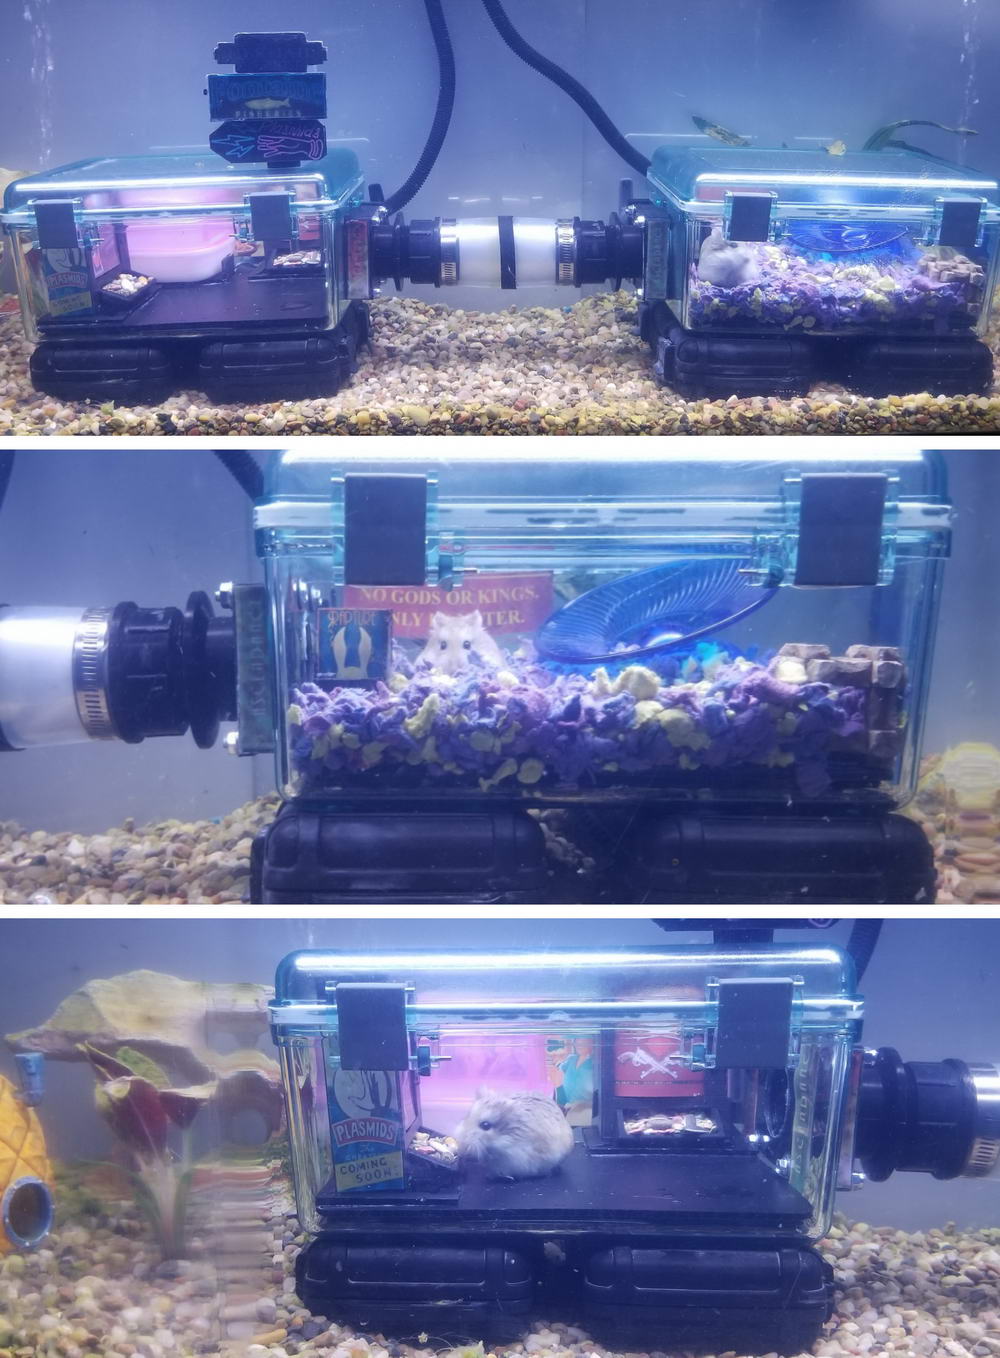 aquarium lighting - No Gods Or Kings Ter Plasmids Cominc Soon